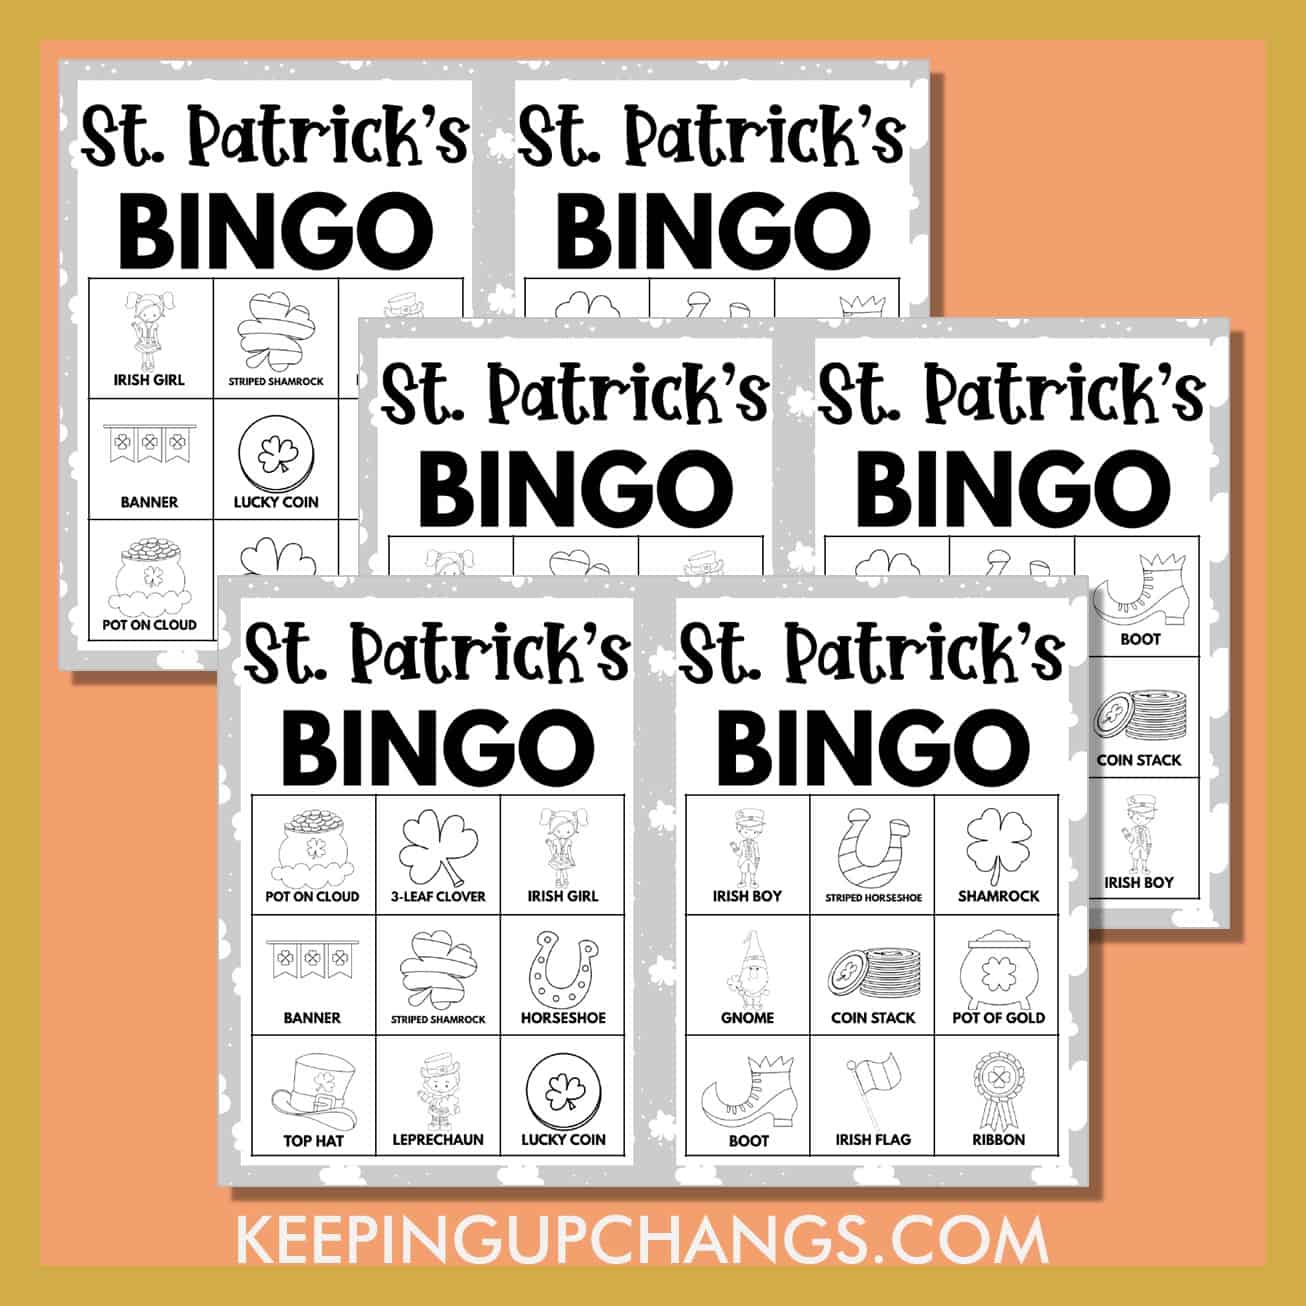 free st patrick's day bingo 3x3 black white coloring game cards.